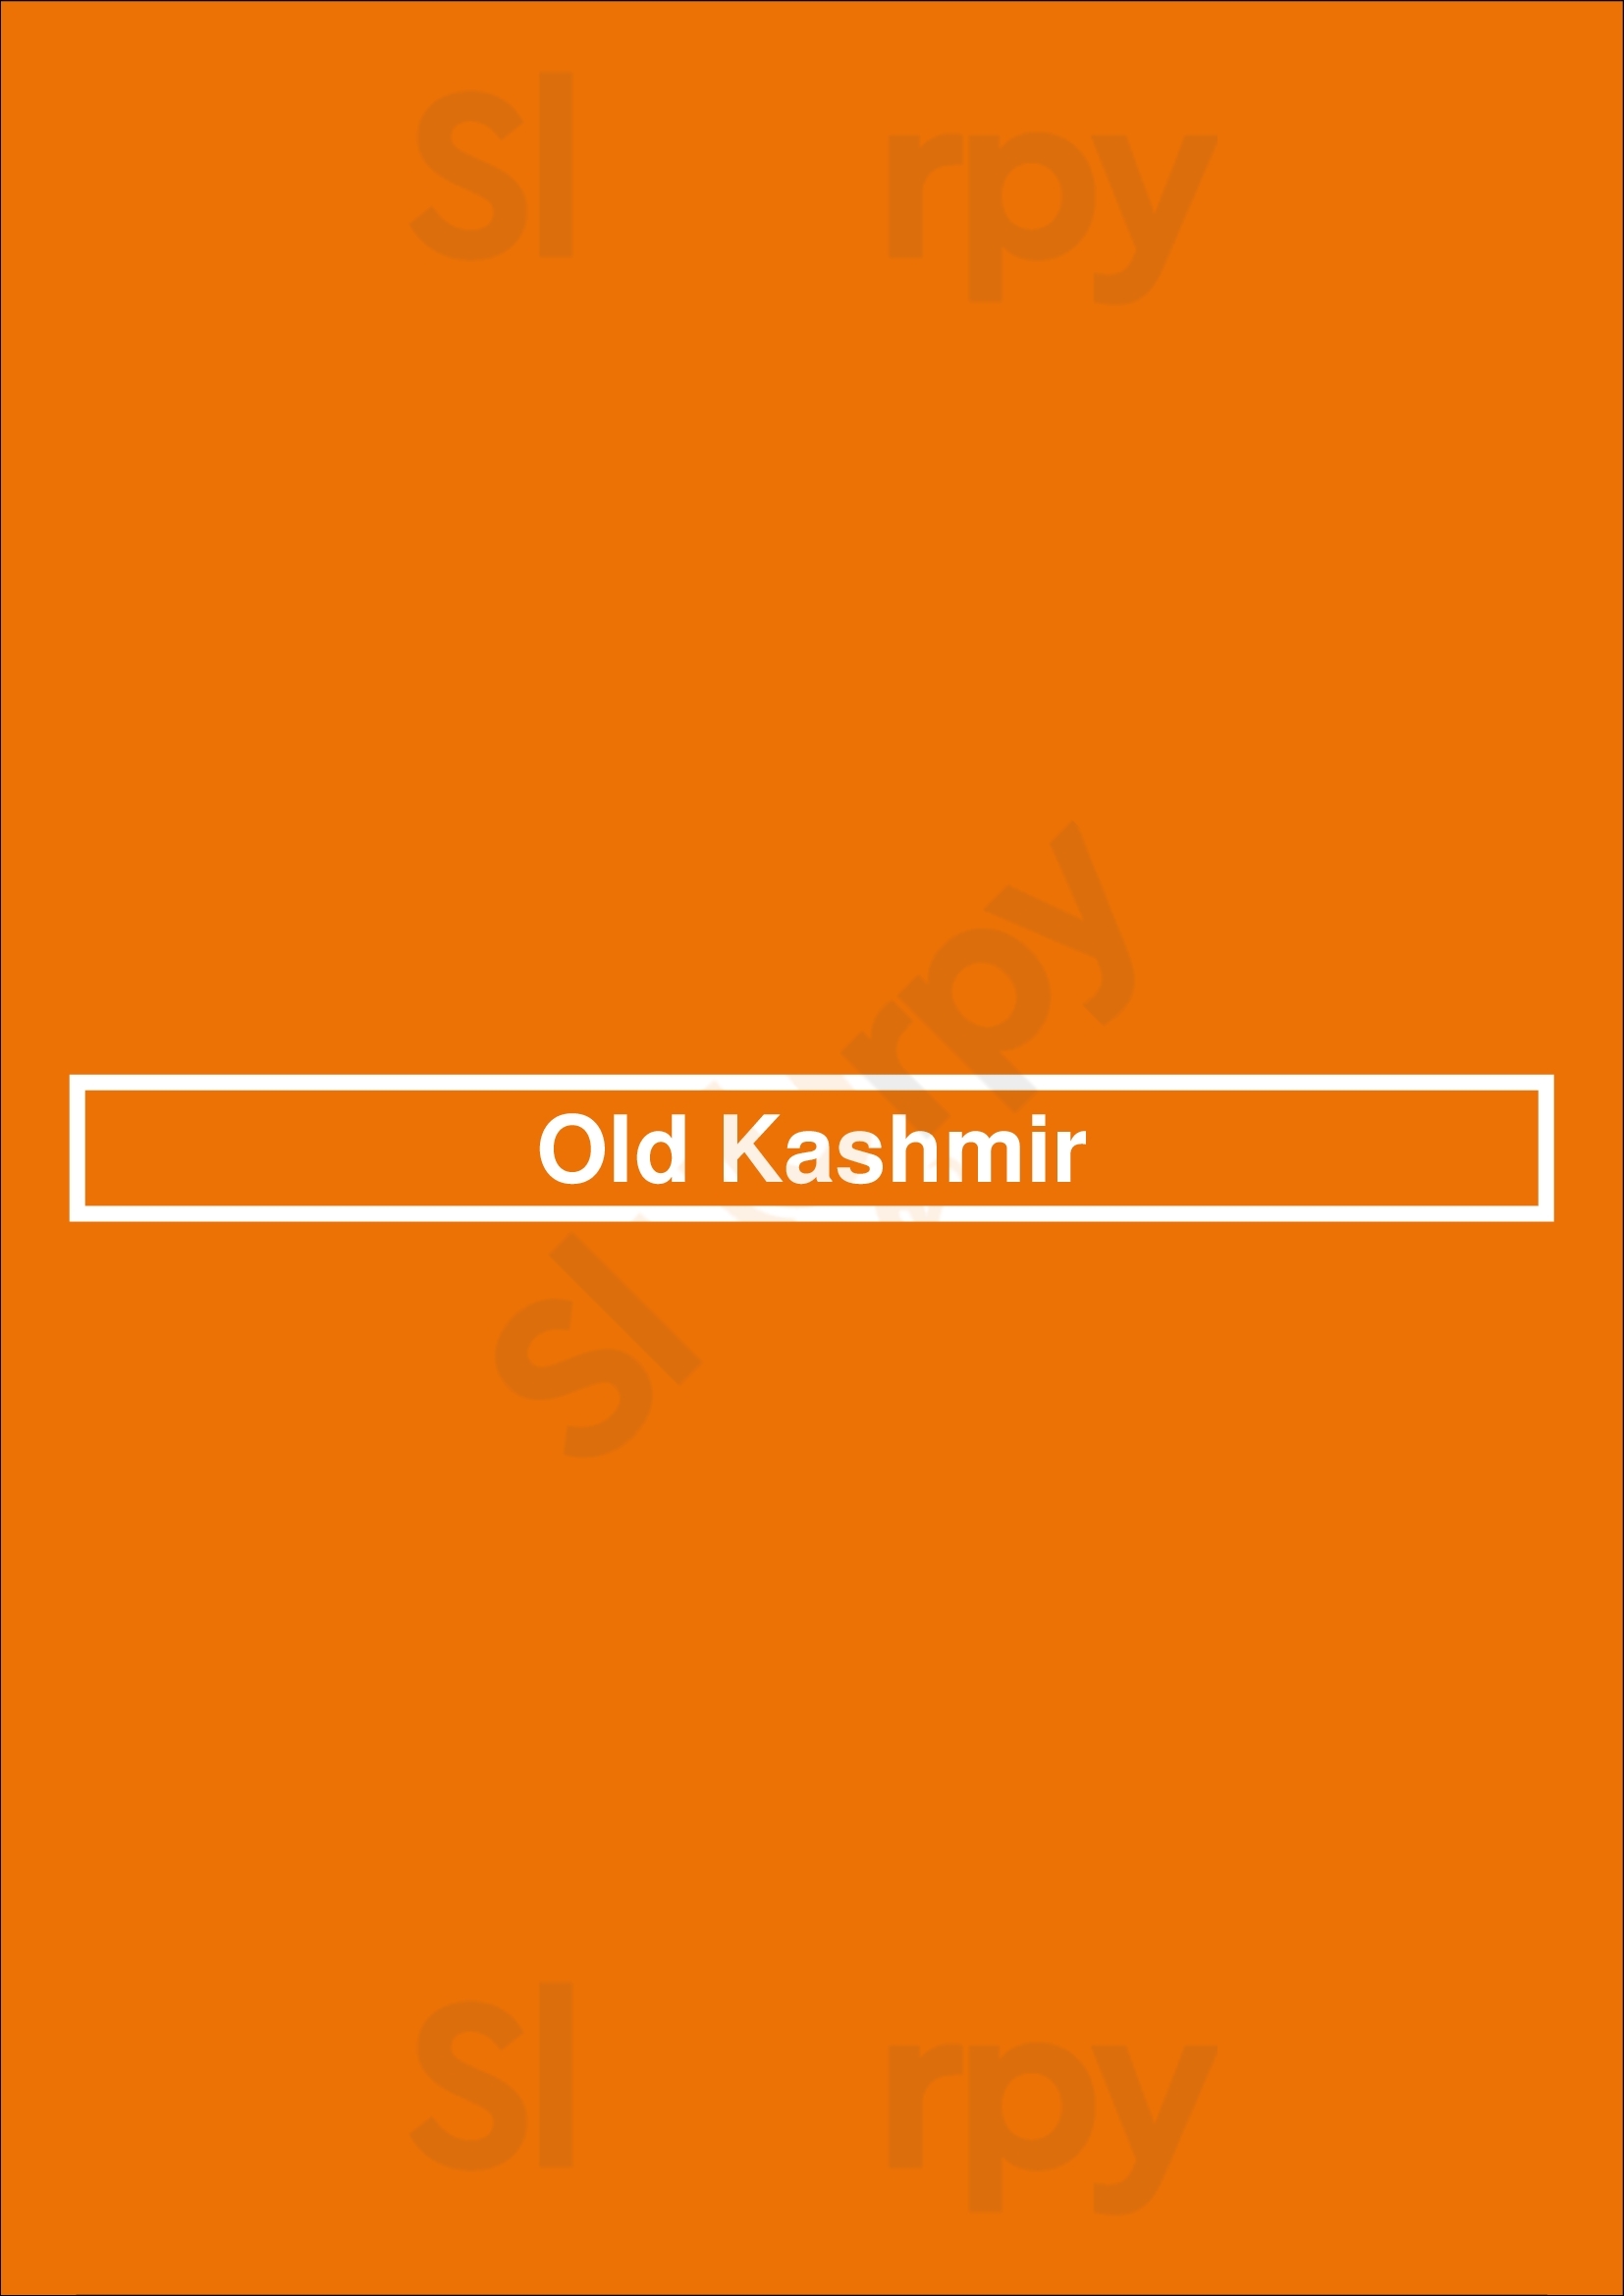 Old Kashmir Paris Menu - 1